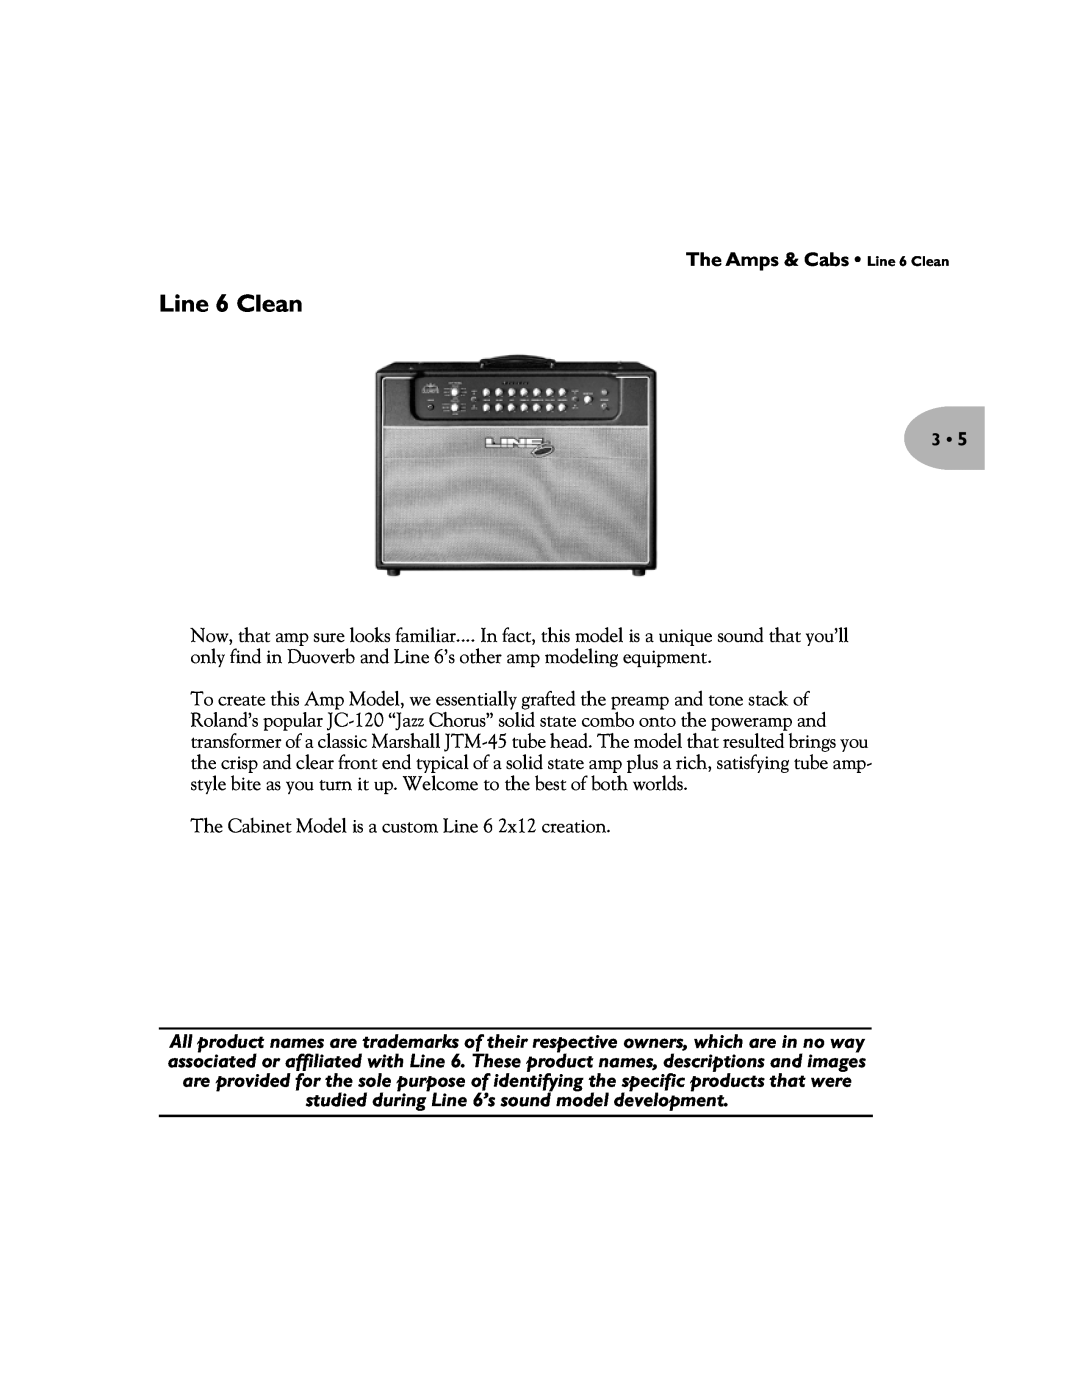 Line 6 Pilot's Handbook manual The Amps & Cabs Line 6 Clean 